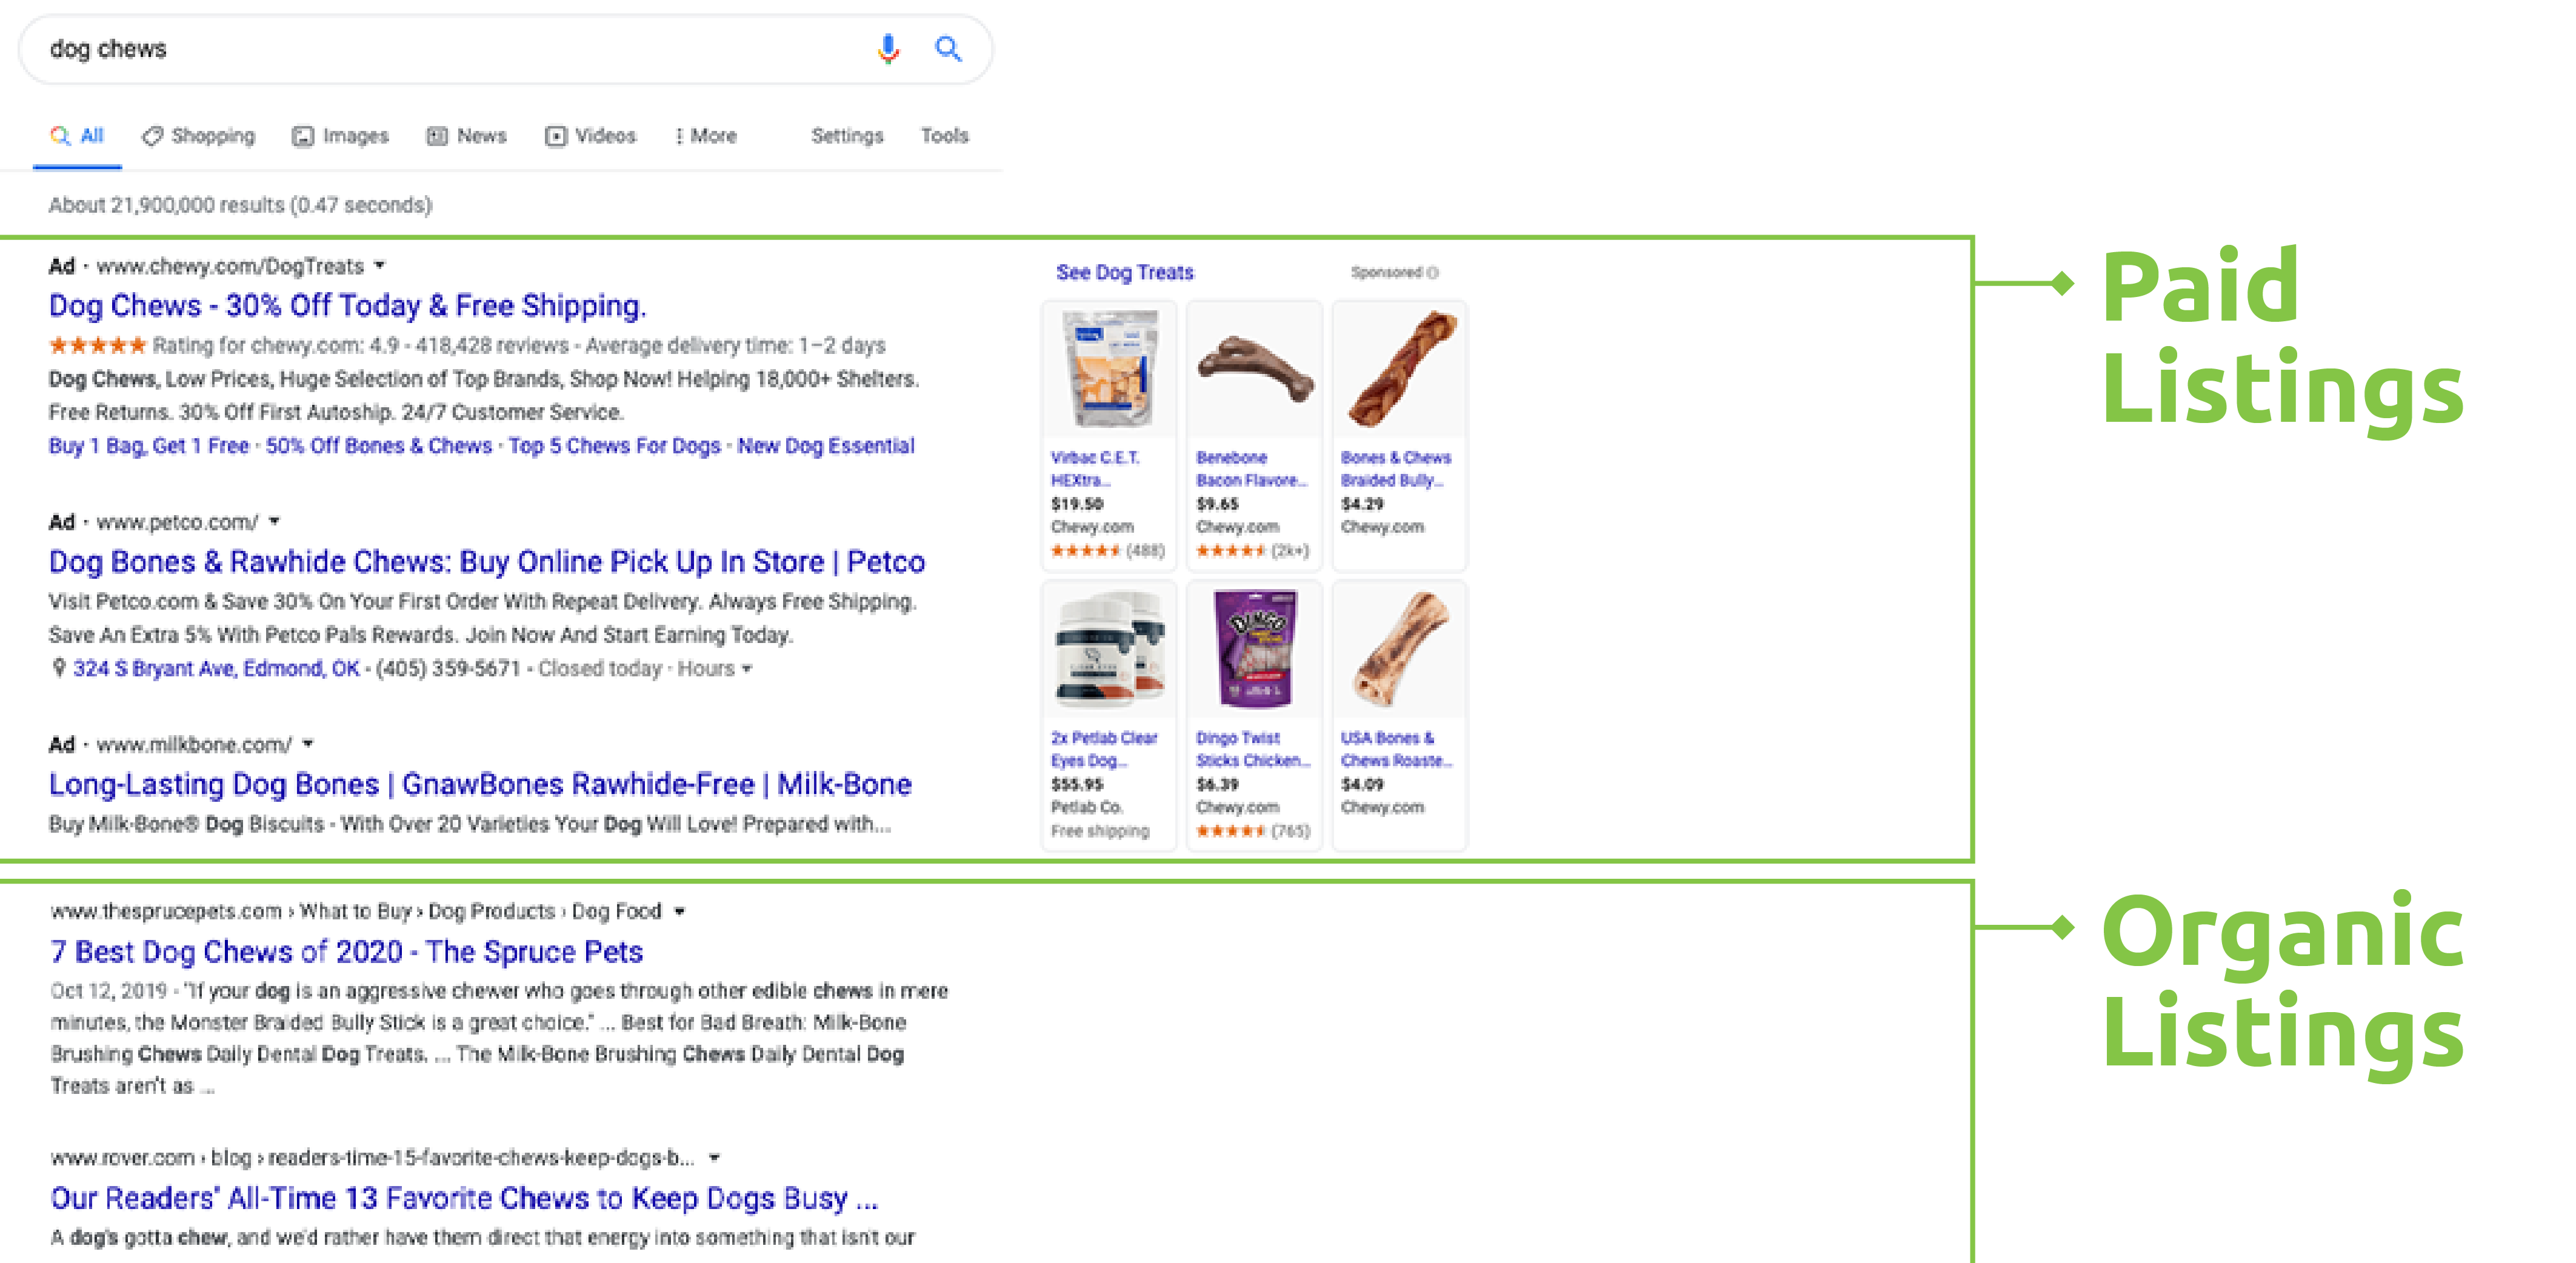 screenshot of google SERP for dog chews highlighting paid search listings vs organic listings